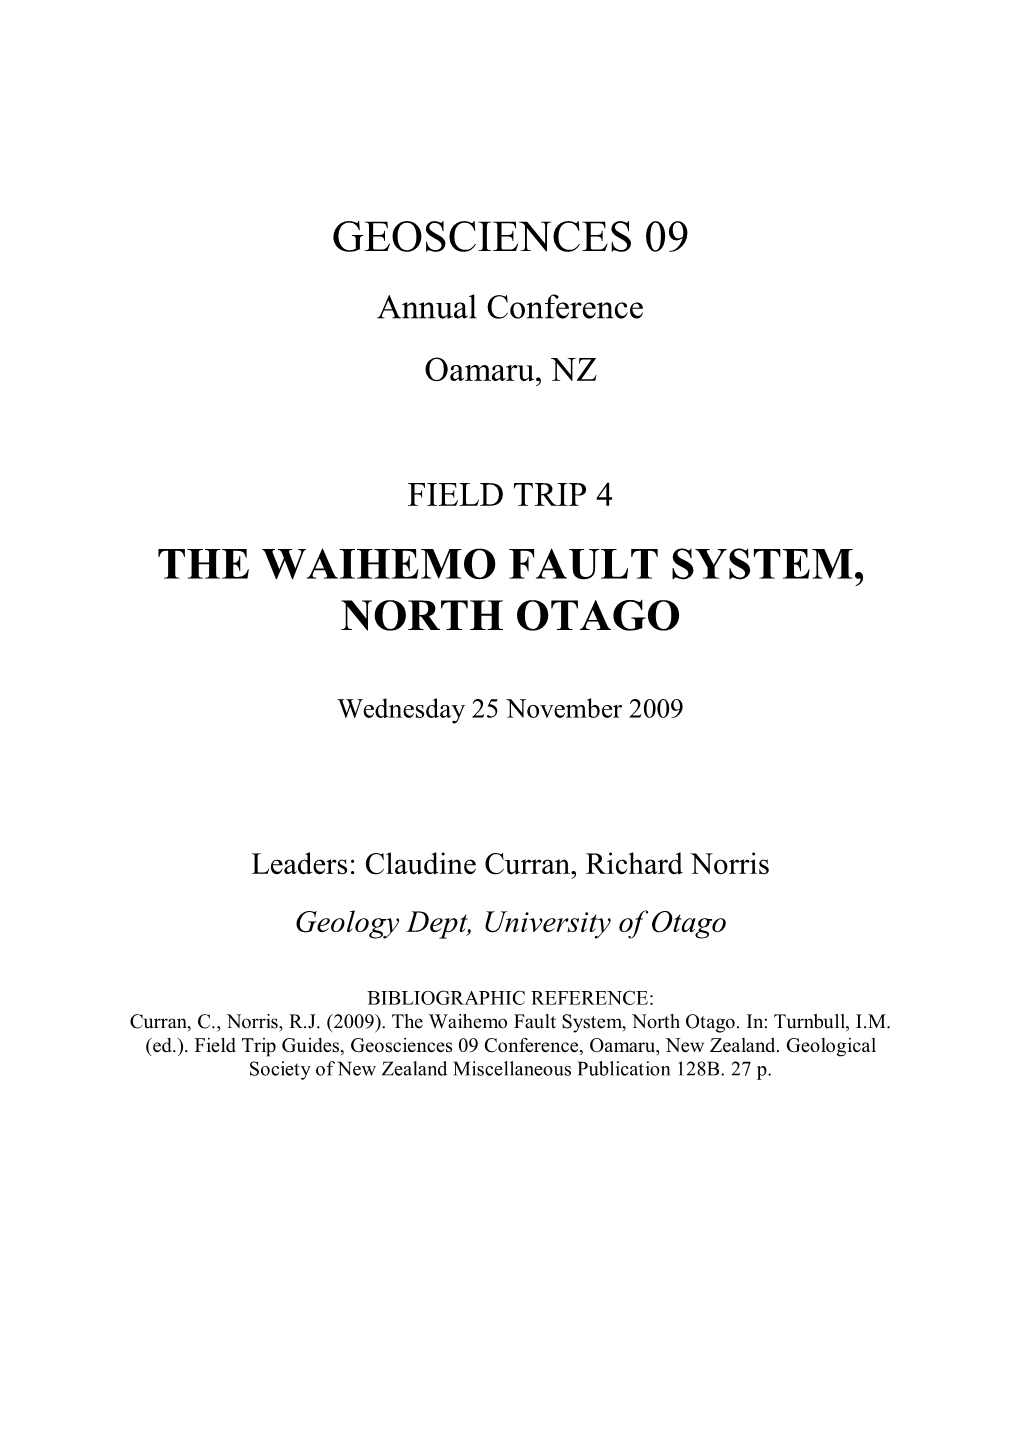 FT4 Waihemo Fault System